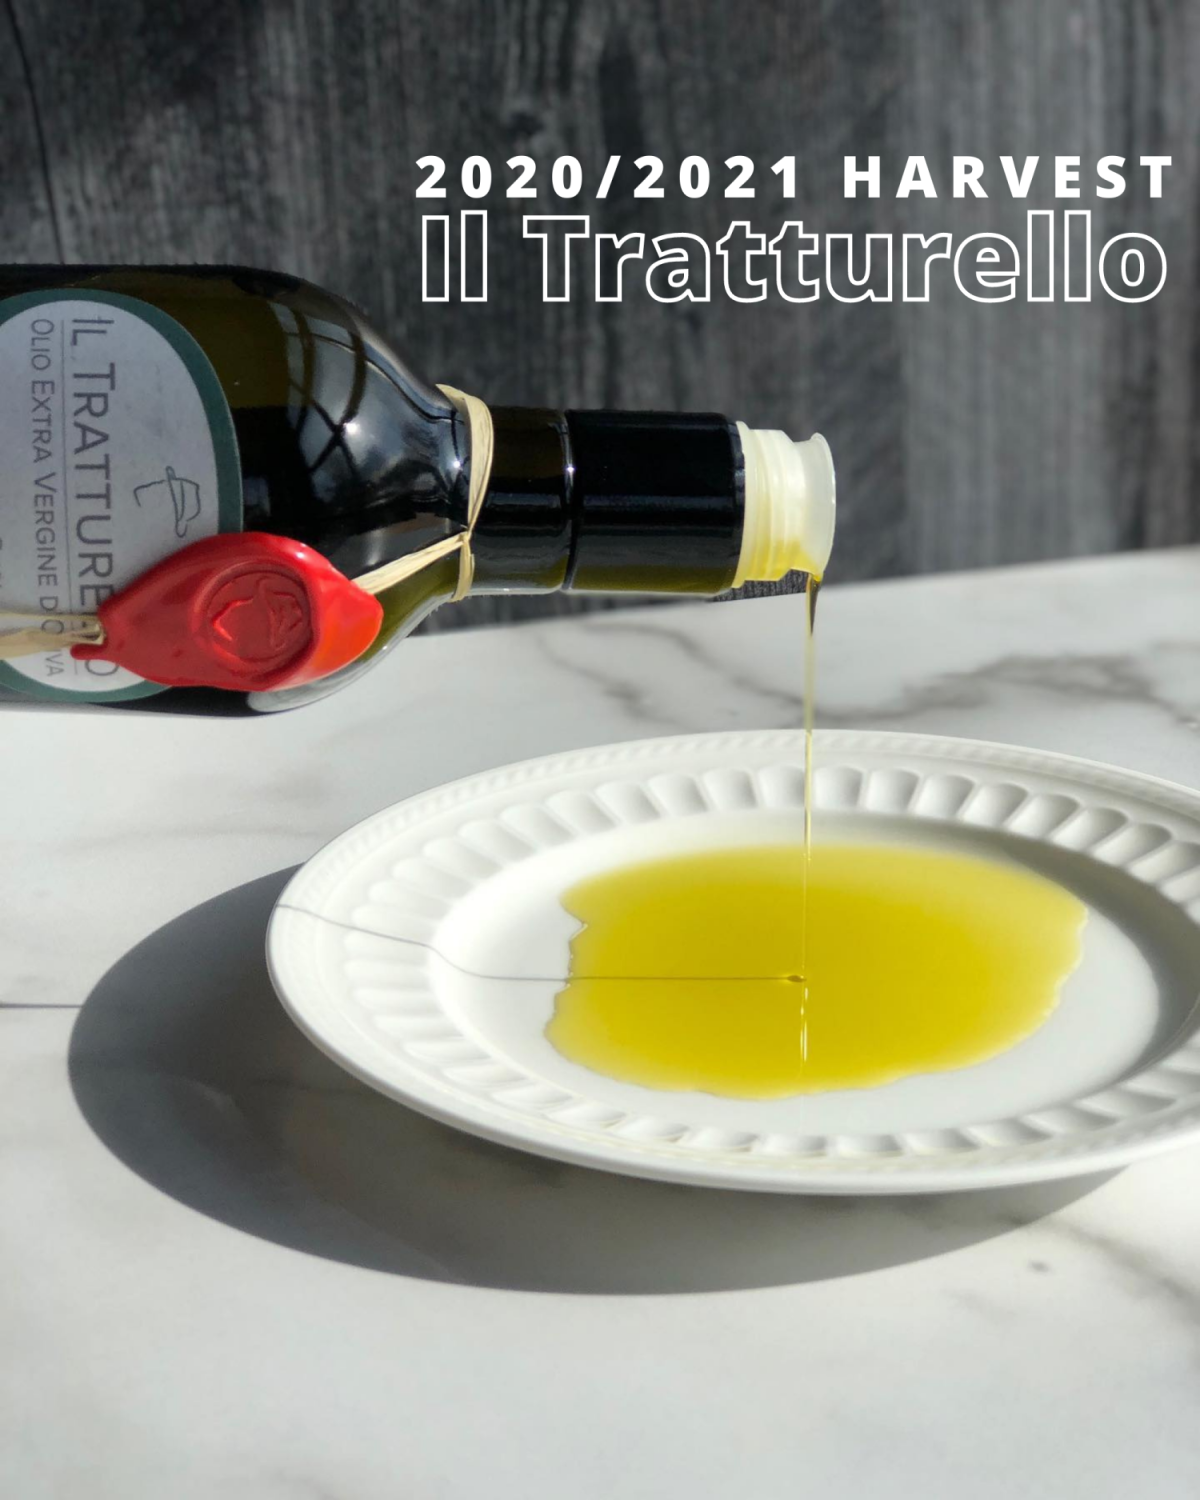 Il Tratturello extra virgin olive oil new harvest